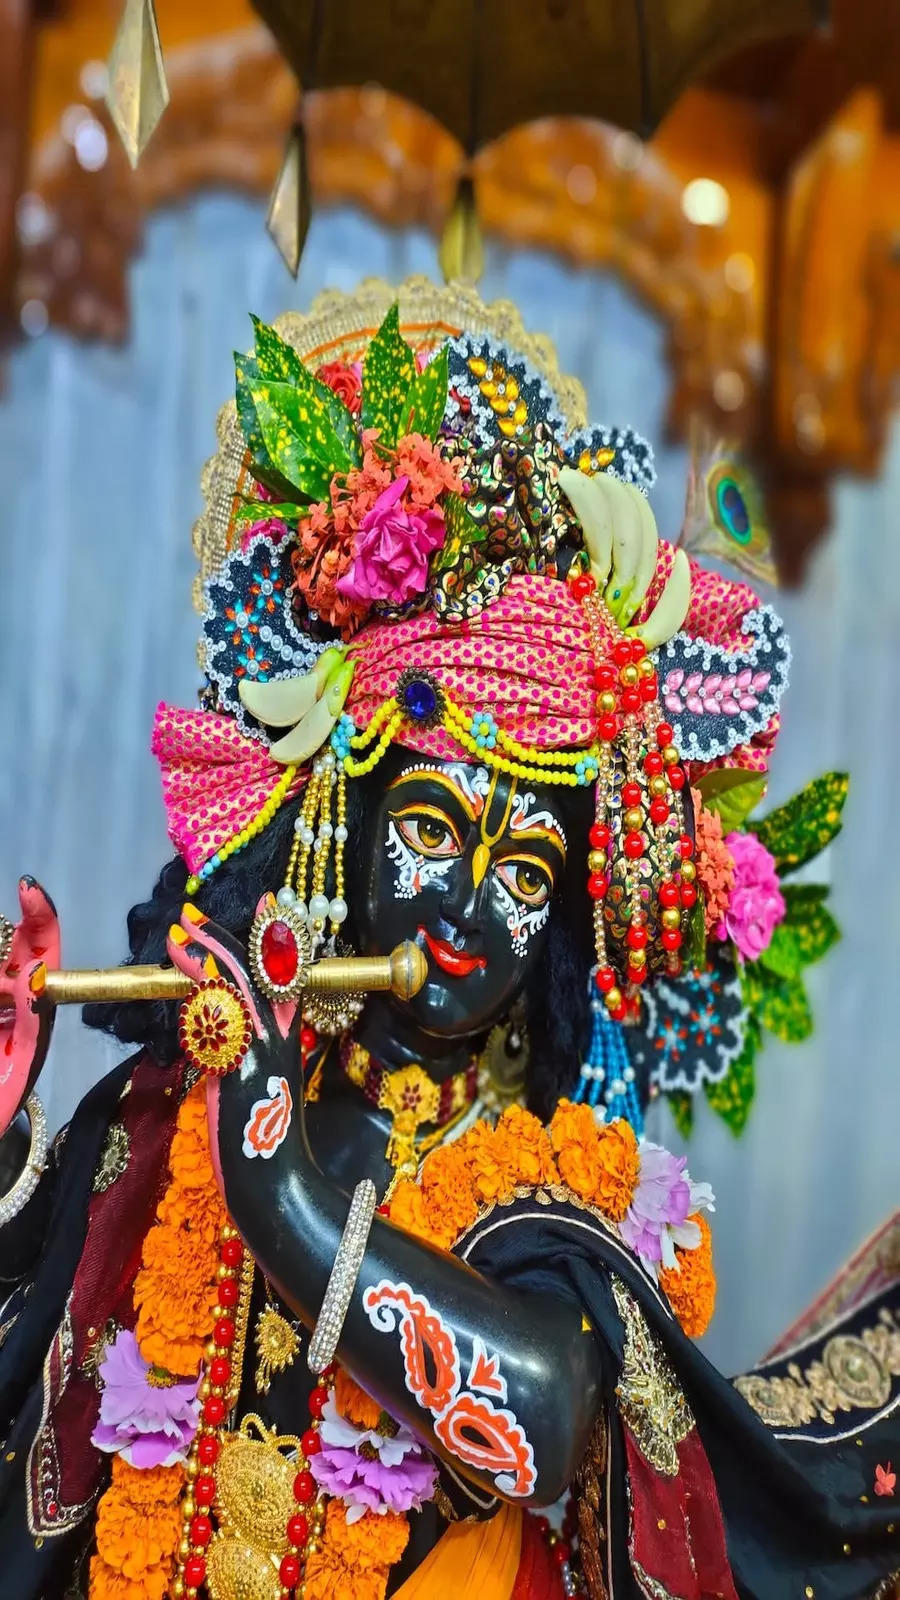 What are the benefits of chanting 'Hare Krishna Hare Krishna